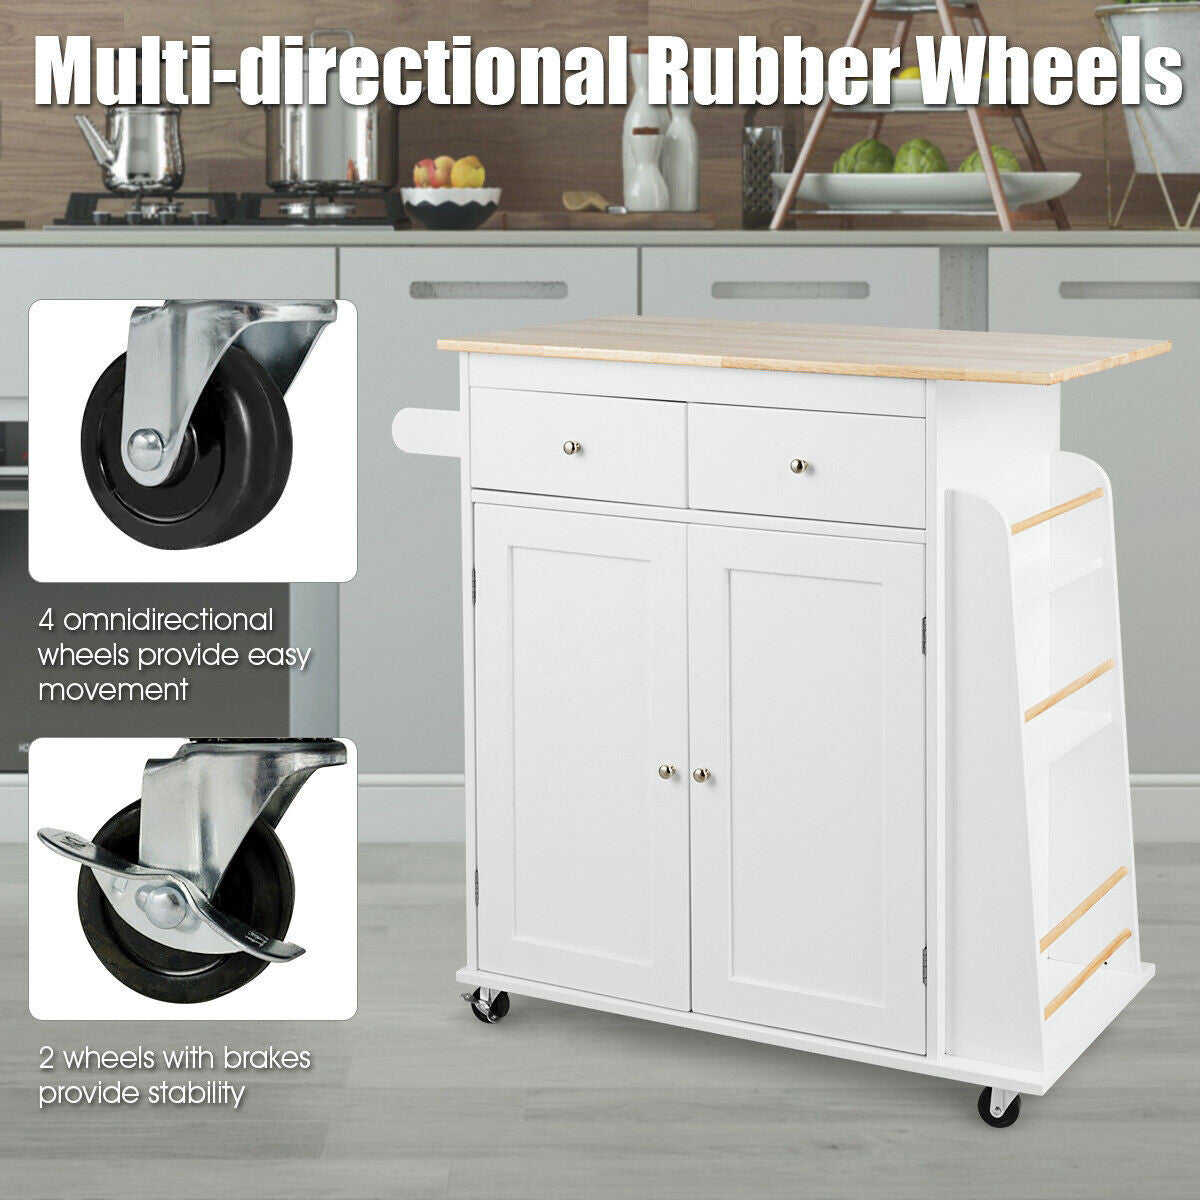 Rubber Wood Countertop Rolling Kitchen Island Cart Kc50280 Wc